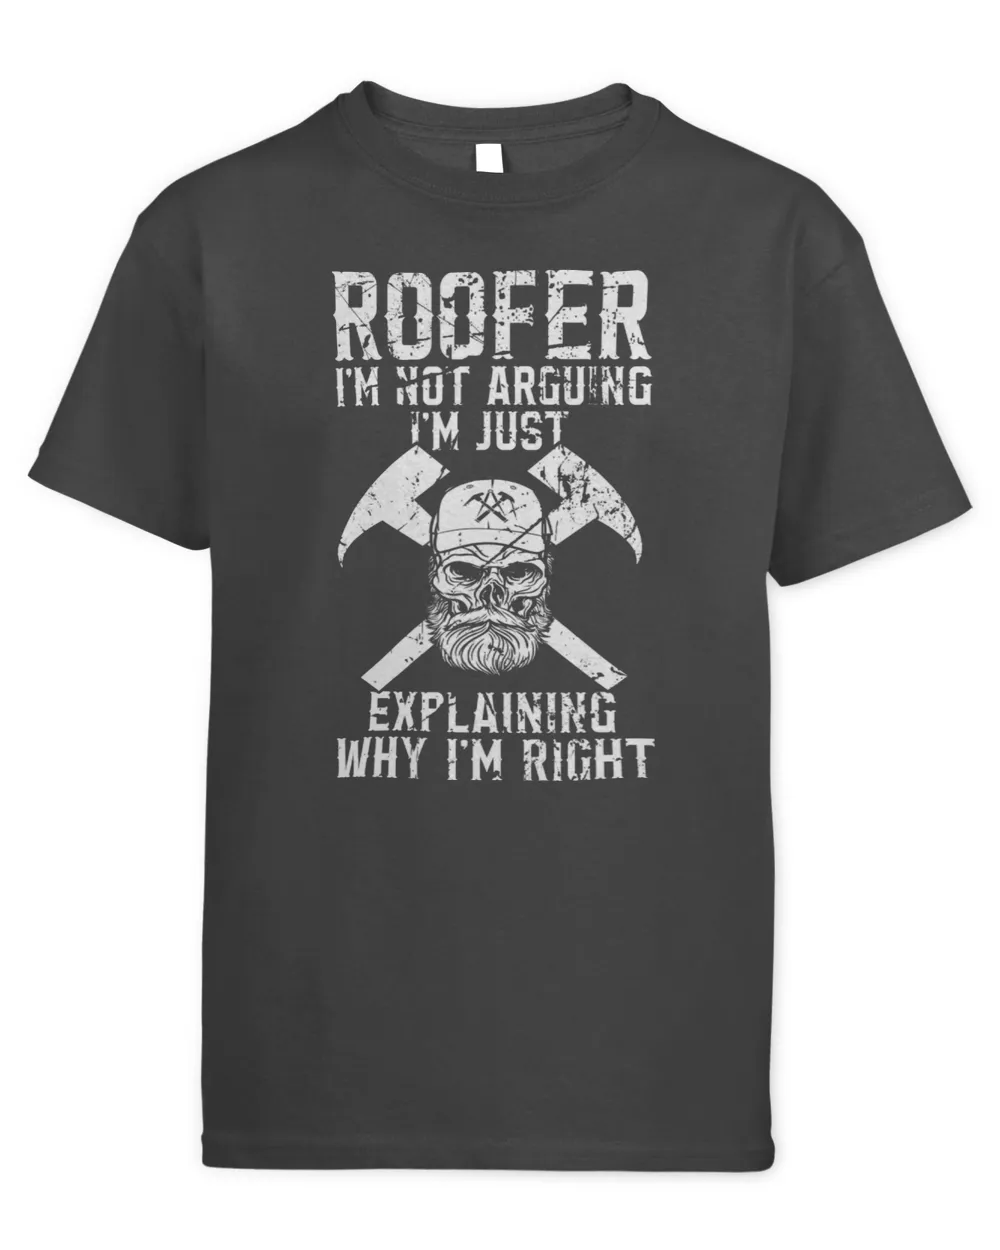 Roofer Funny Retro Roofing Roof Equipment Job Repair621